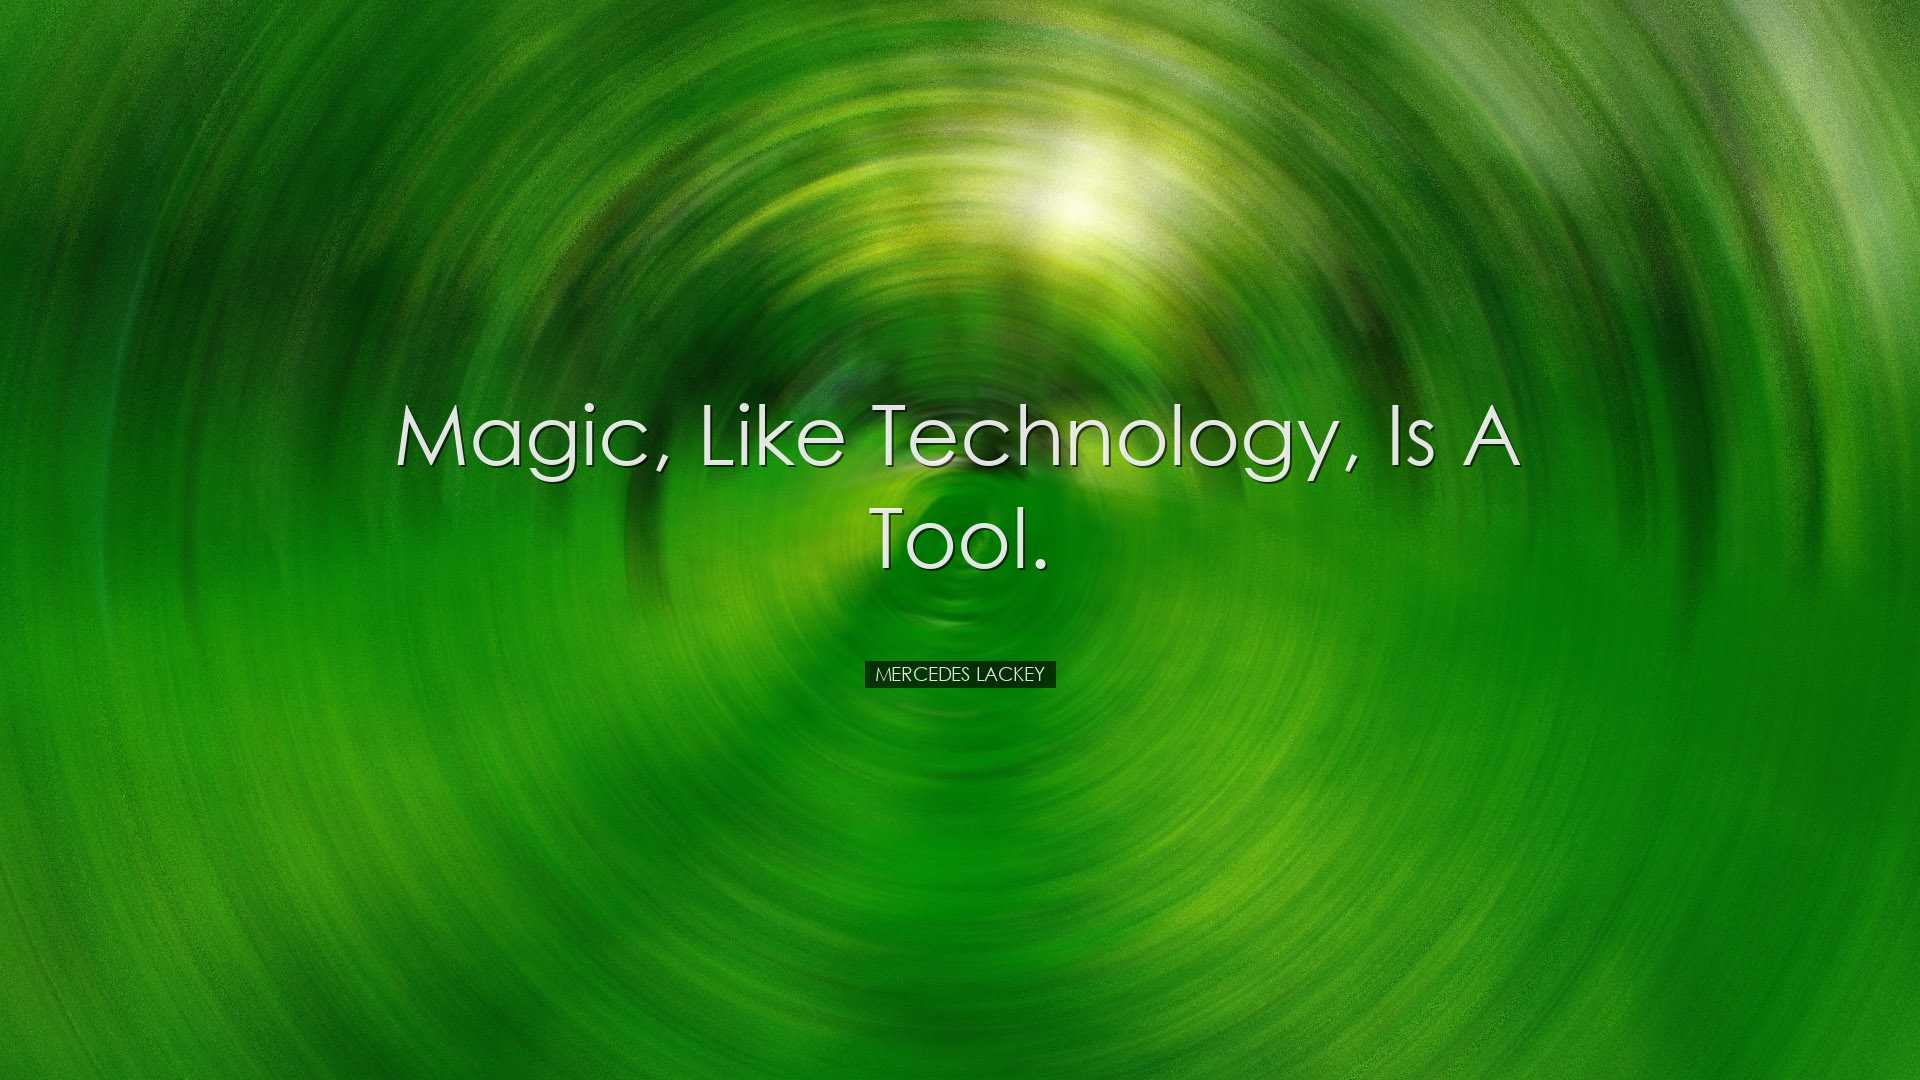 Magic, like technology, is a tool. - Mercedes Lackey